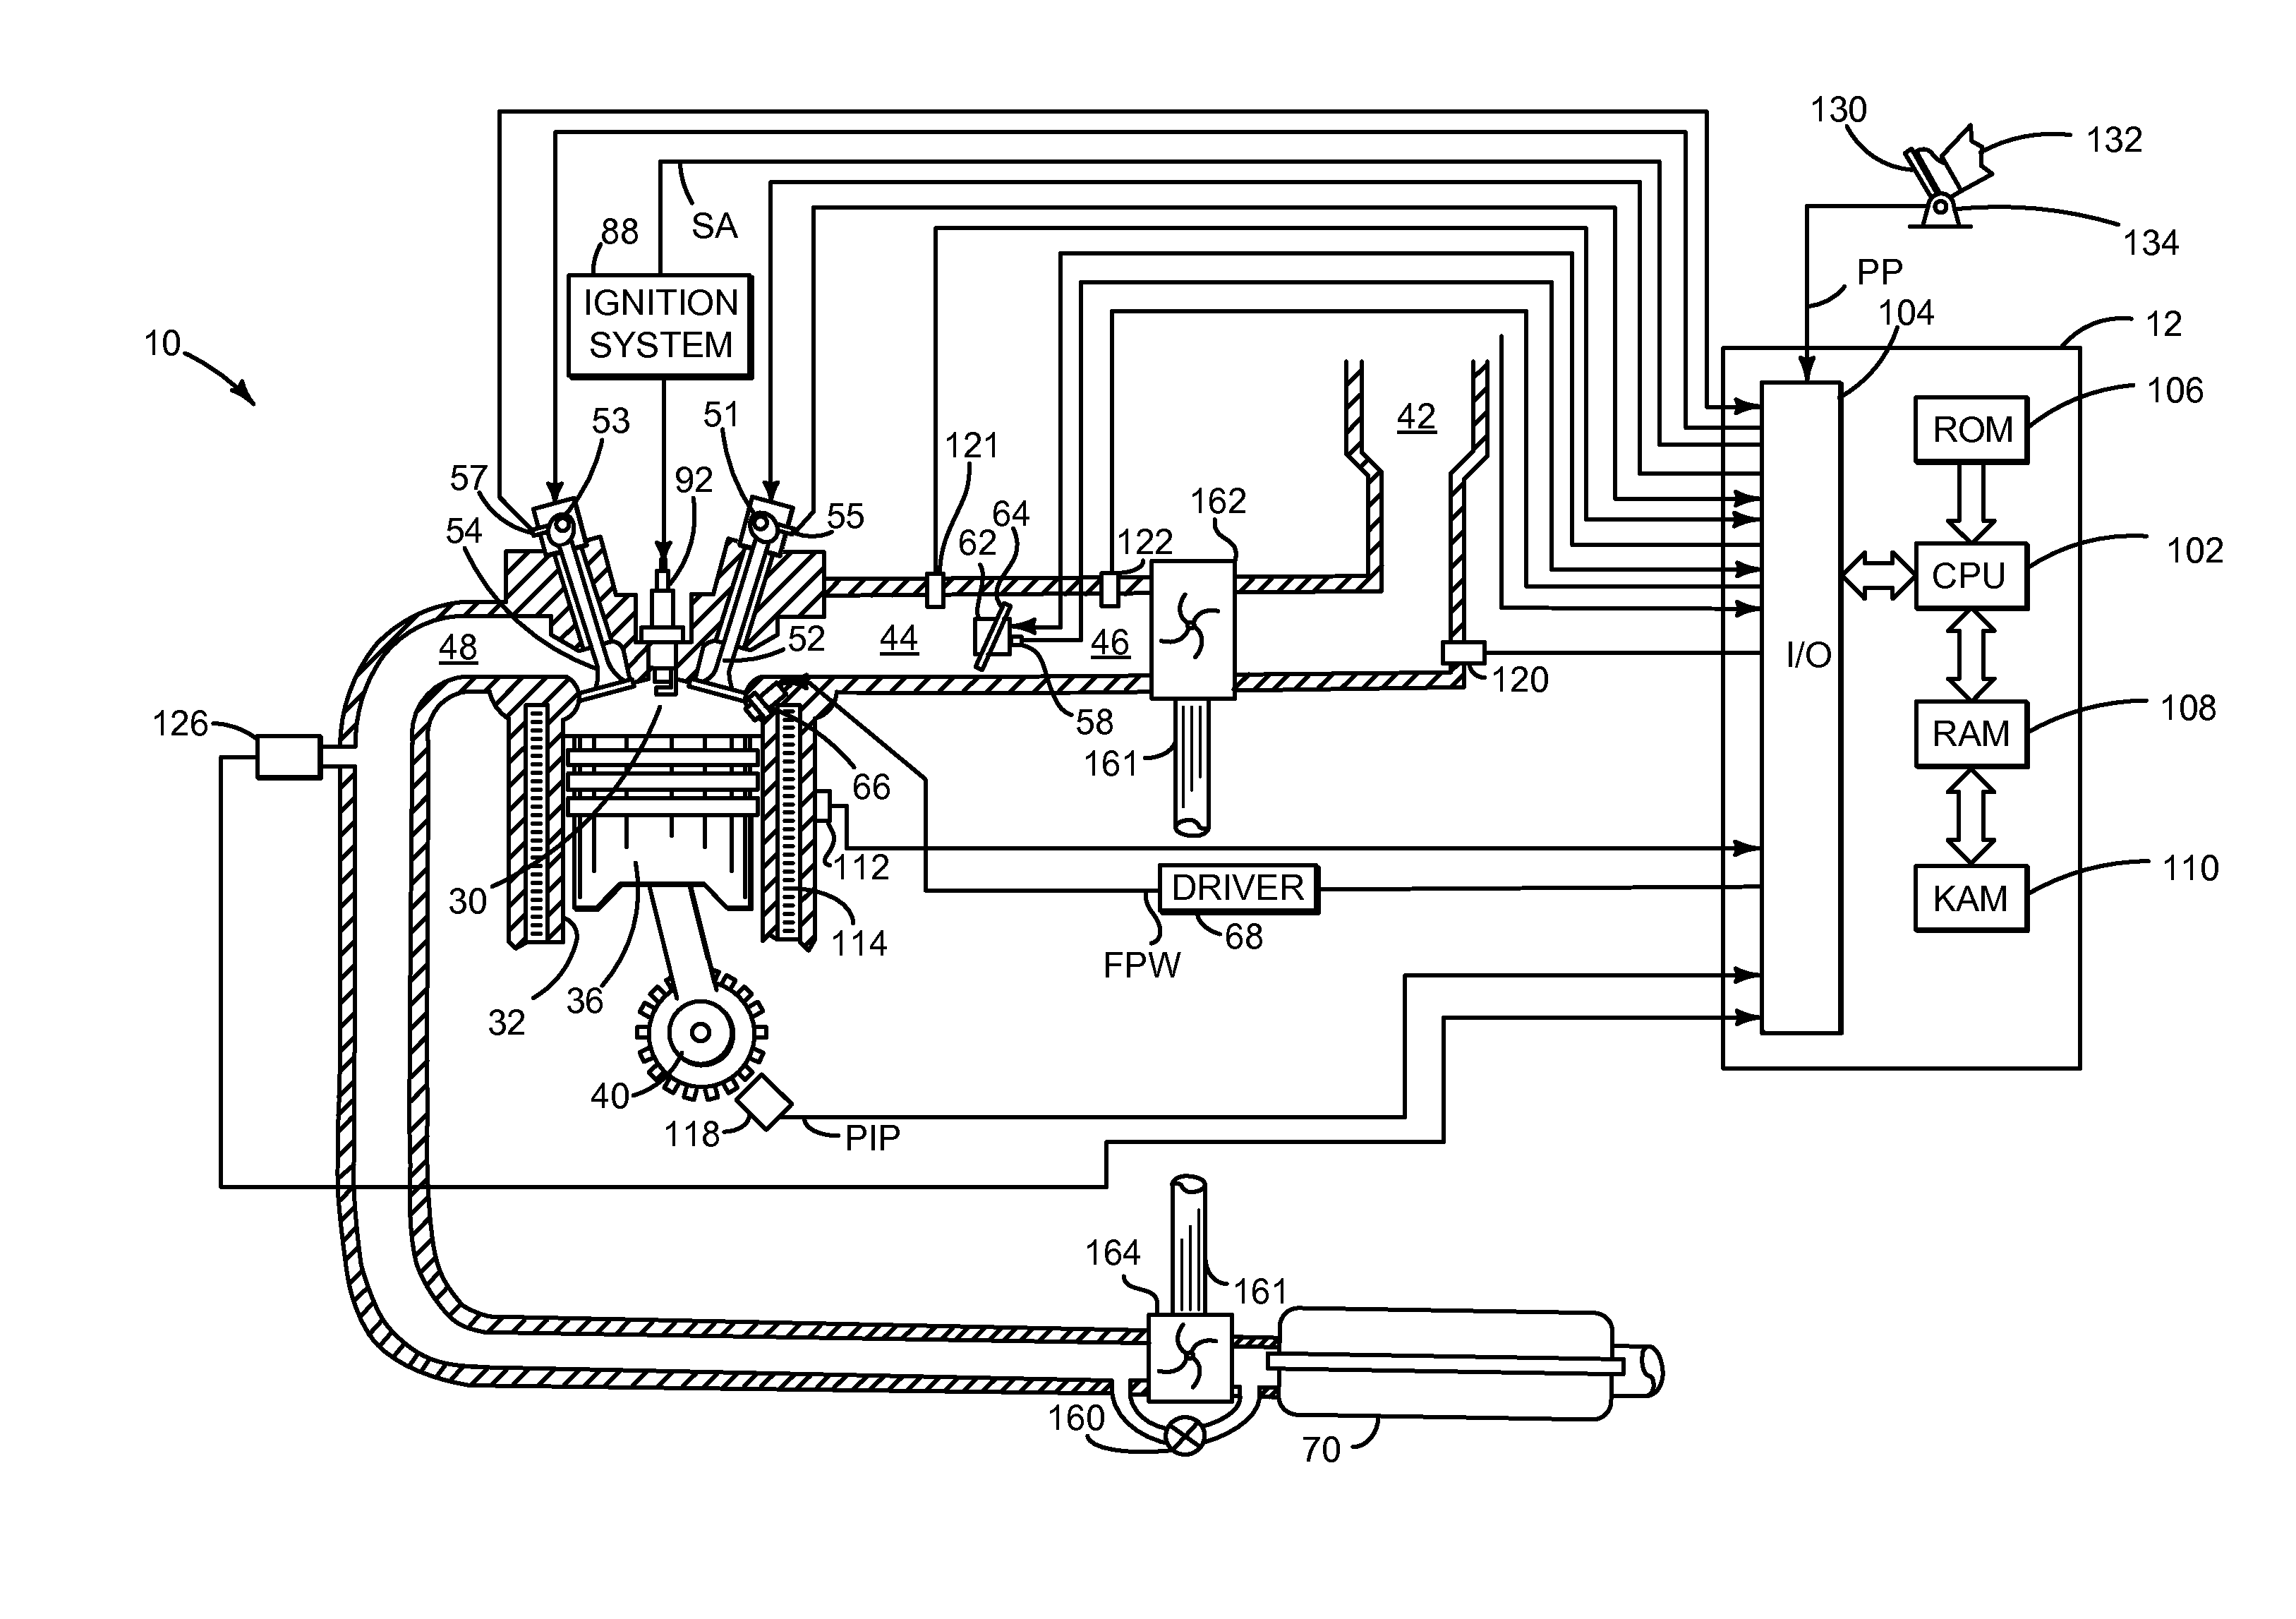 Fuel pump with metering valve